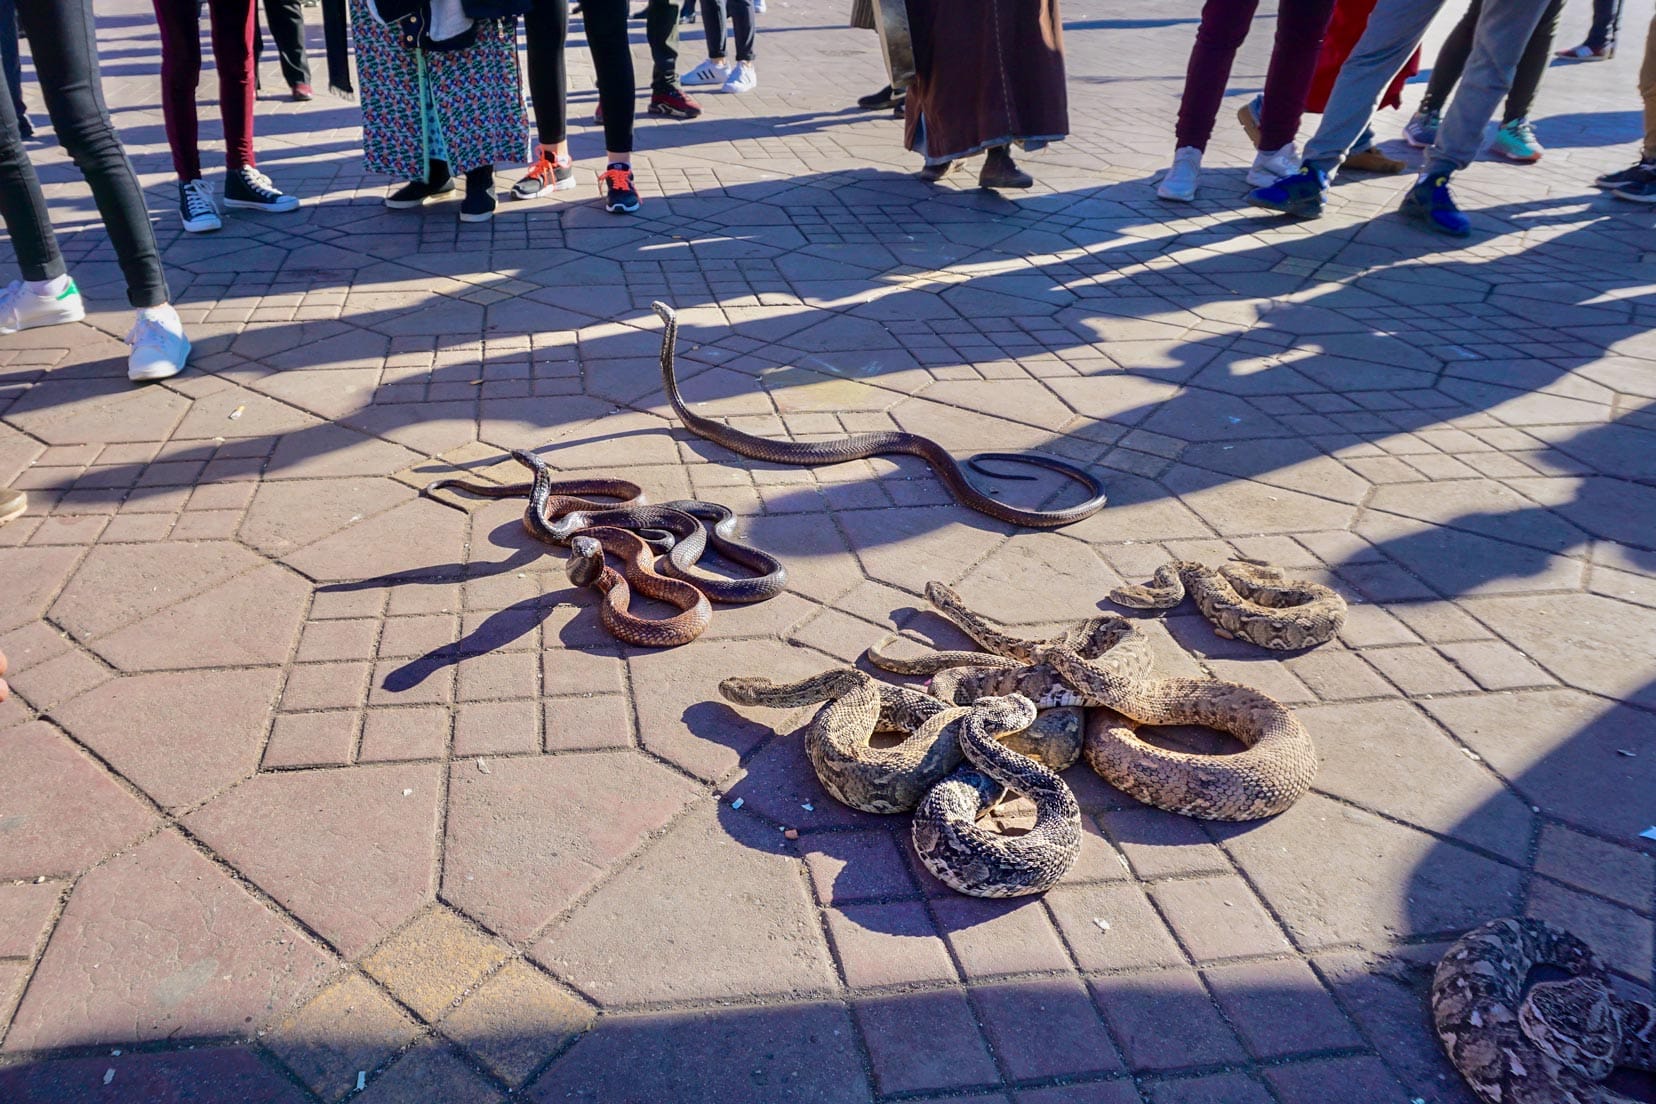 snakes-at-market